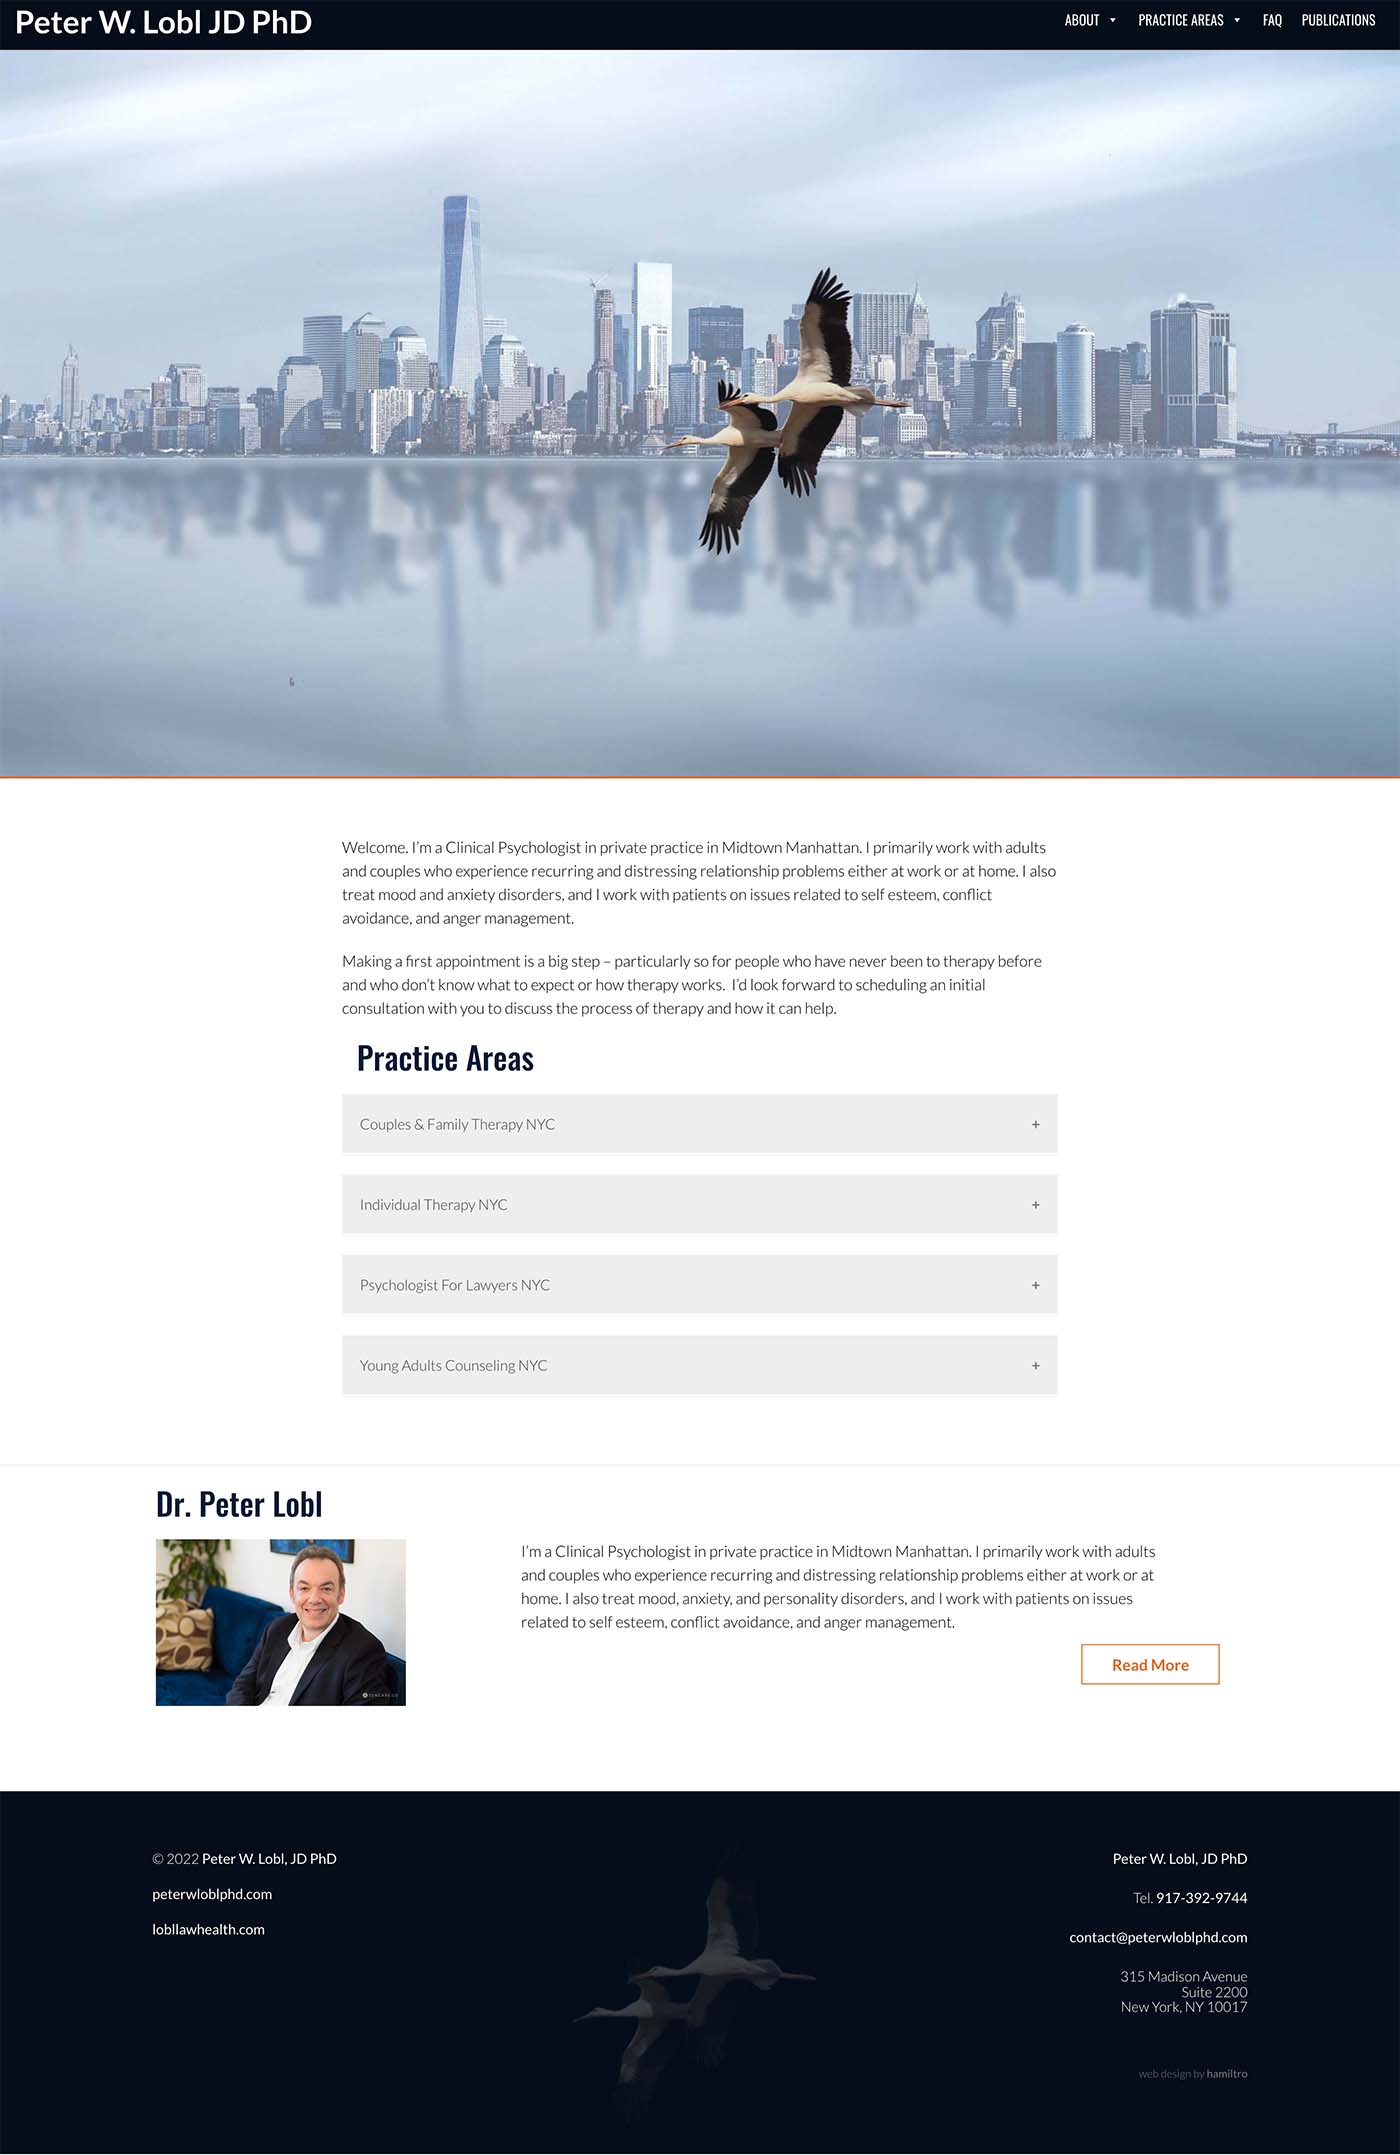 website design for a clinicalpsychologist - Peter Lobl PhD